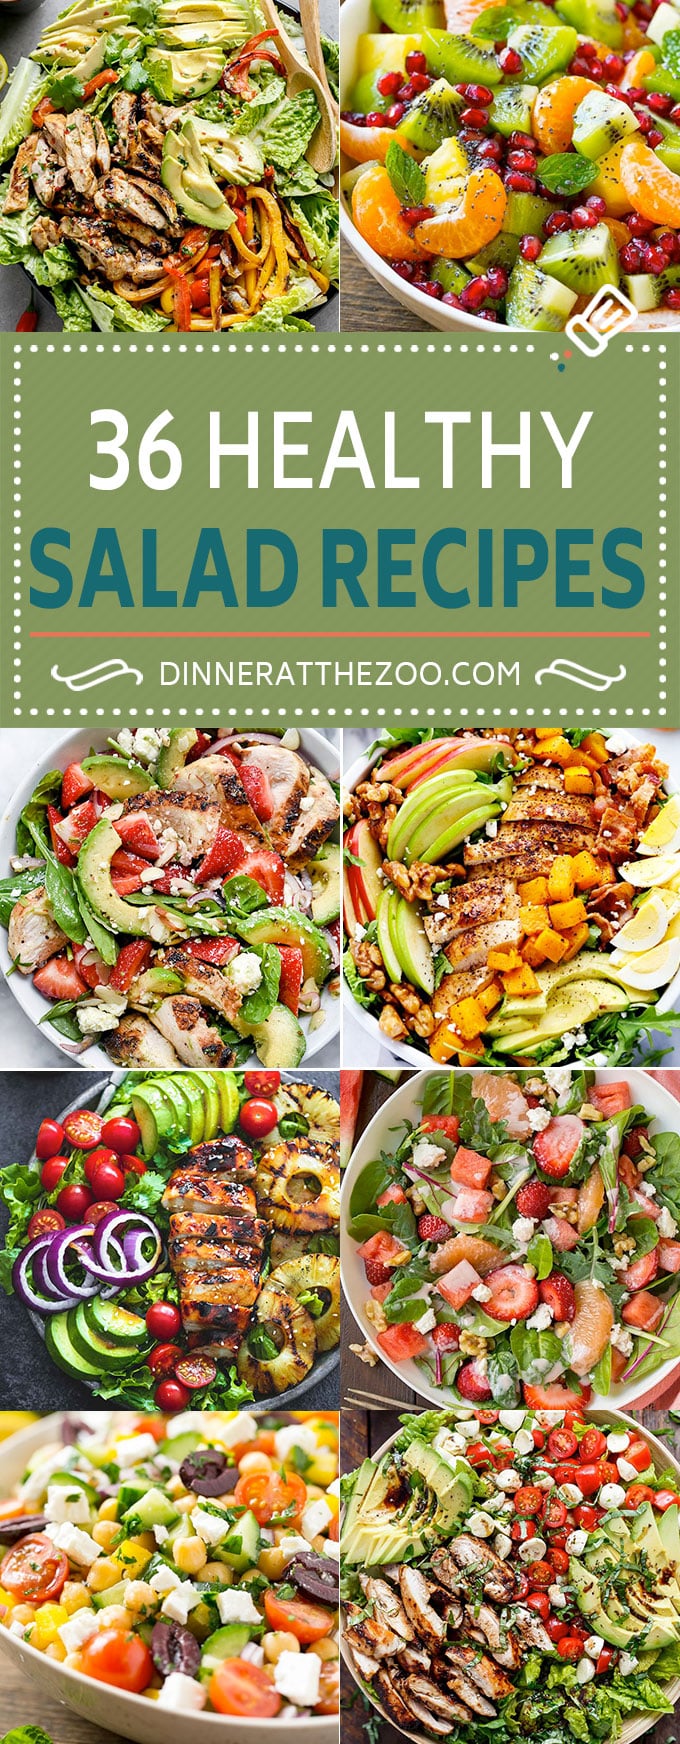 36 Healthy Salad Recipes | Healthy Salad | Chicken Salad | Green Salad | Chopped Salad | Detox Salad | Low Calorie Salad | Fruit Salad #salad #healthy #cleaneating #veggies #fruit #dinneratthezoo